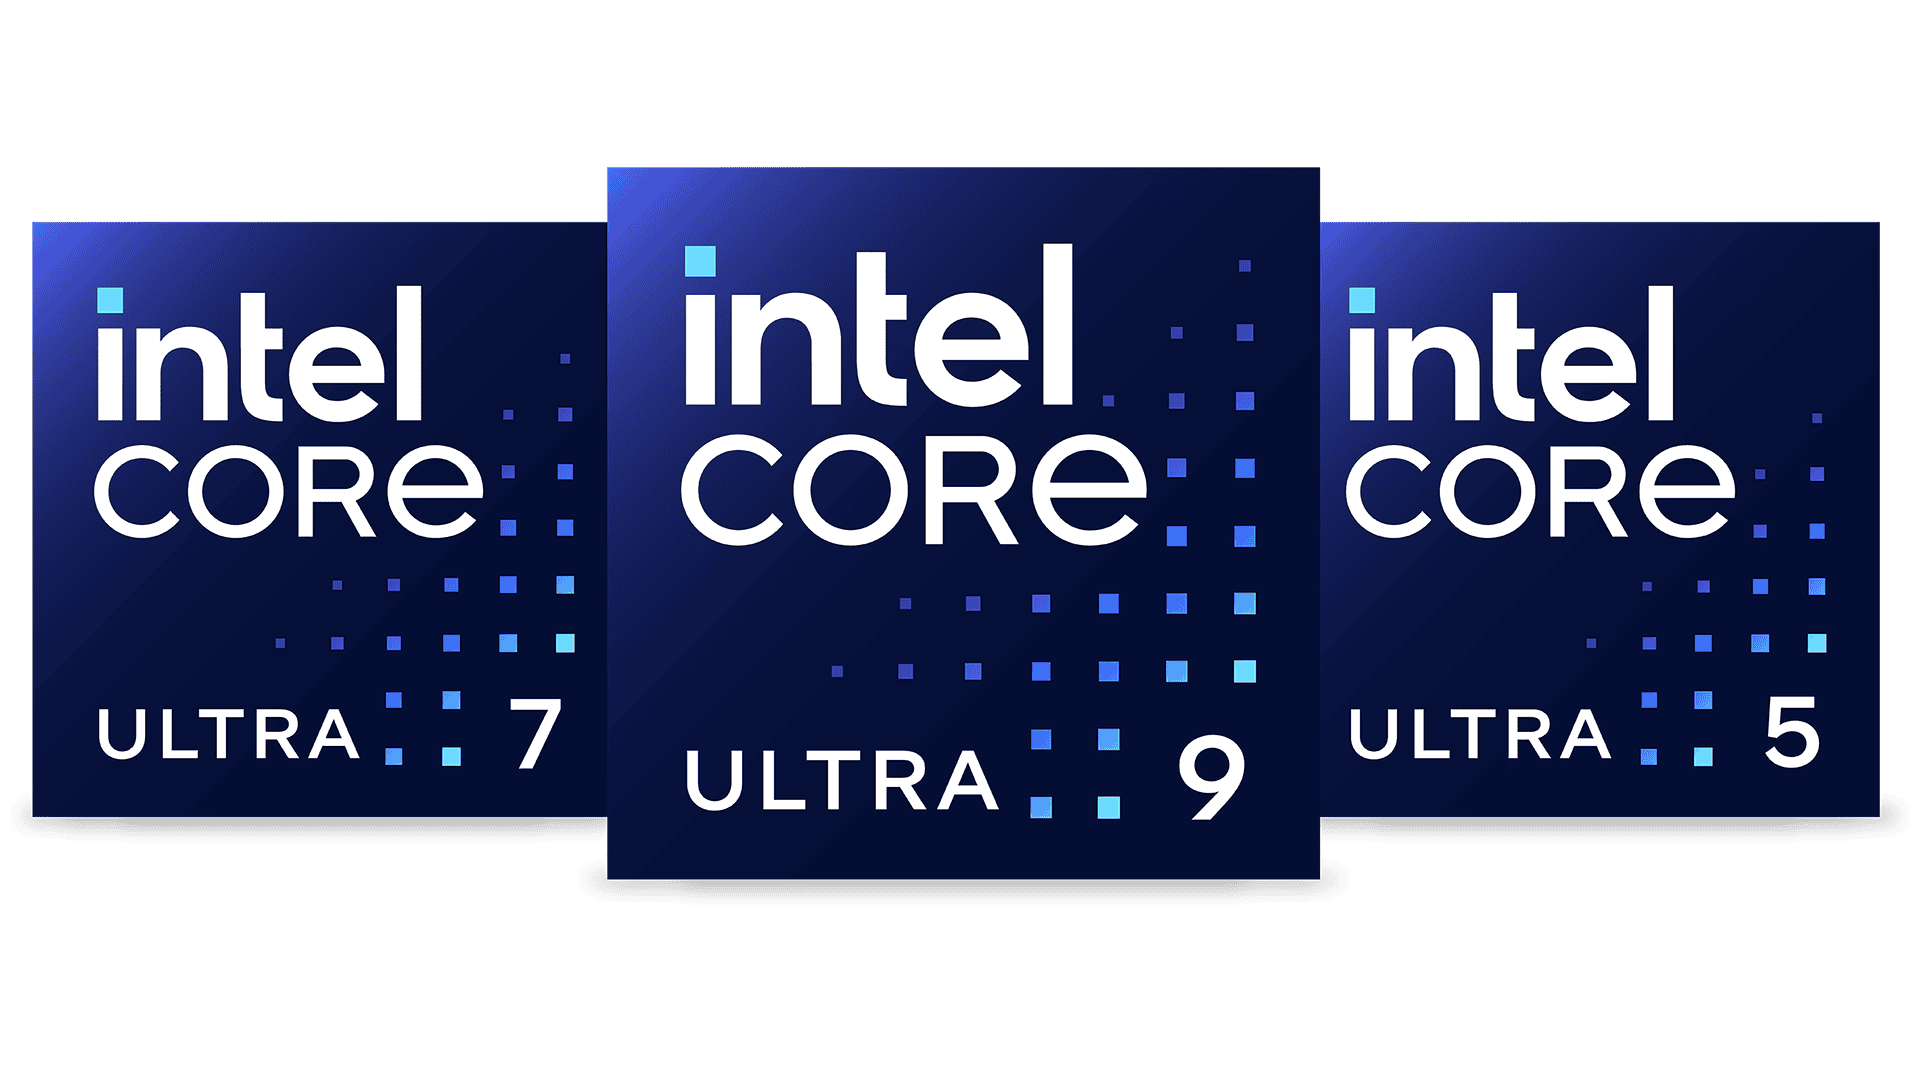 Intel Core Ultra Naming